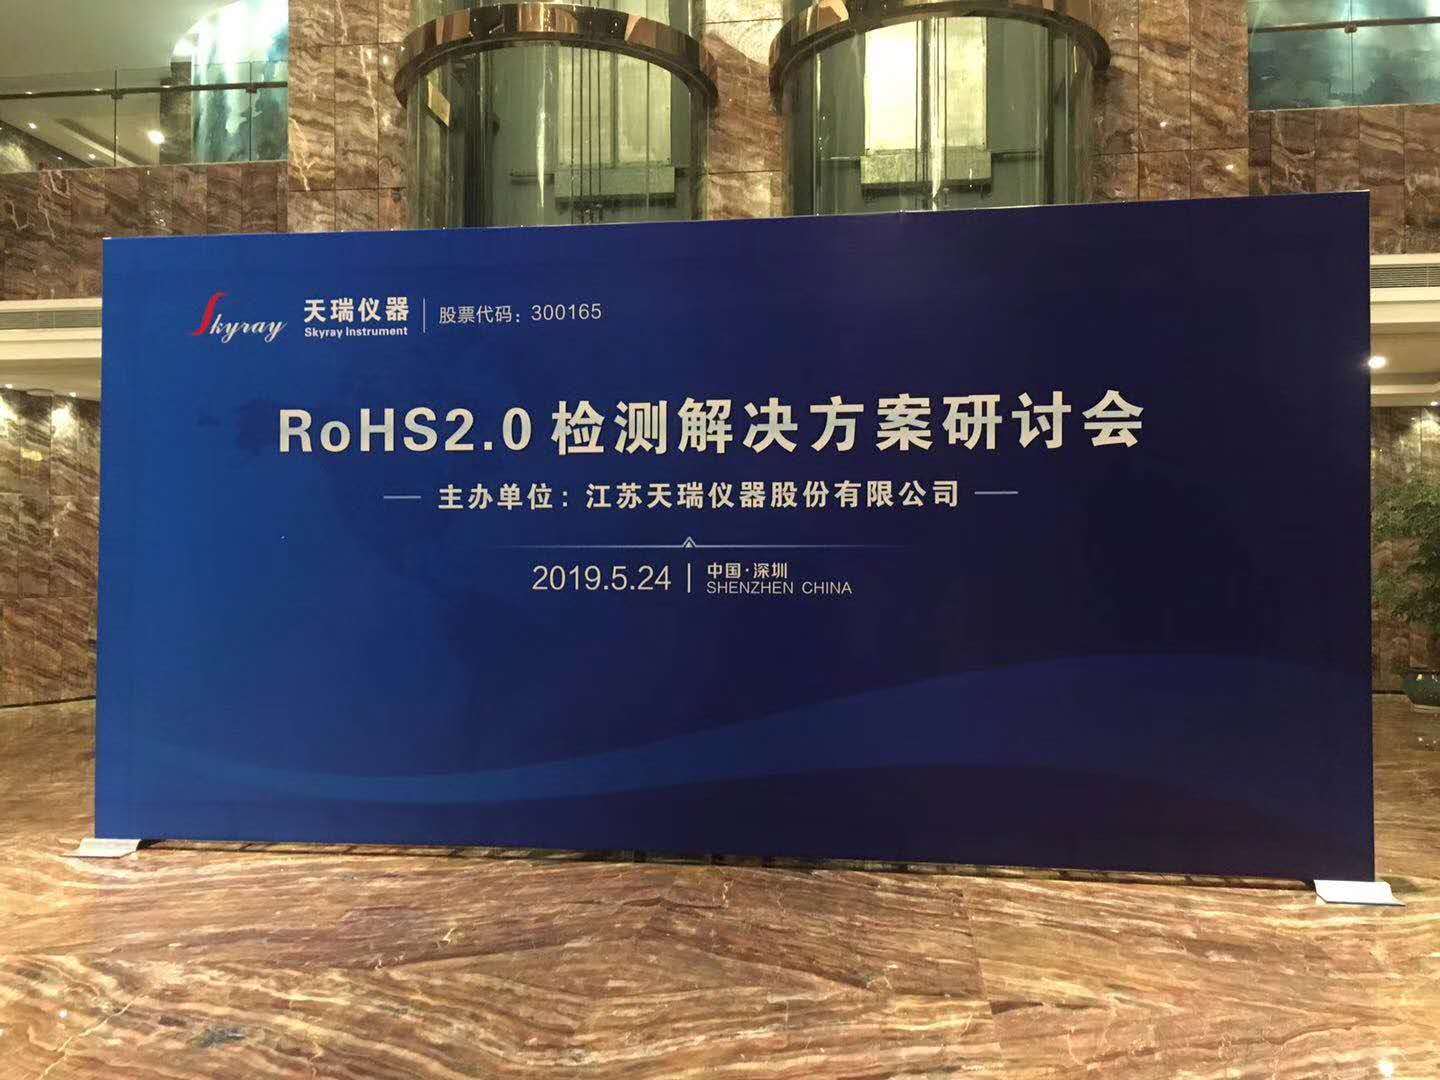 ​ROHS2.0十项环保分析仪价格